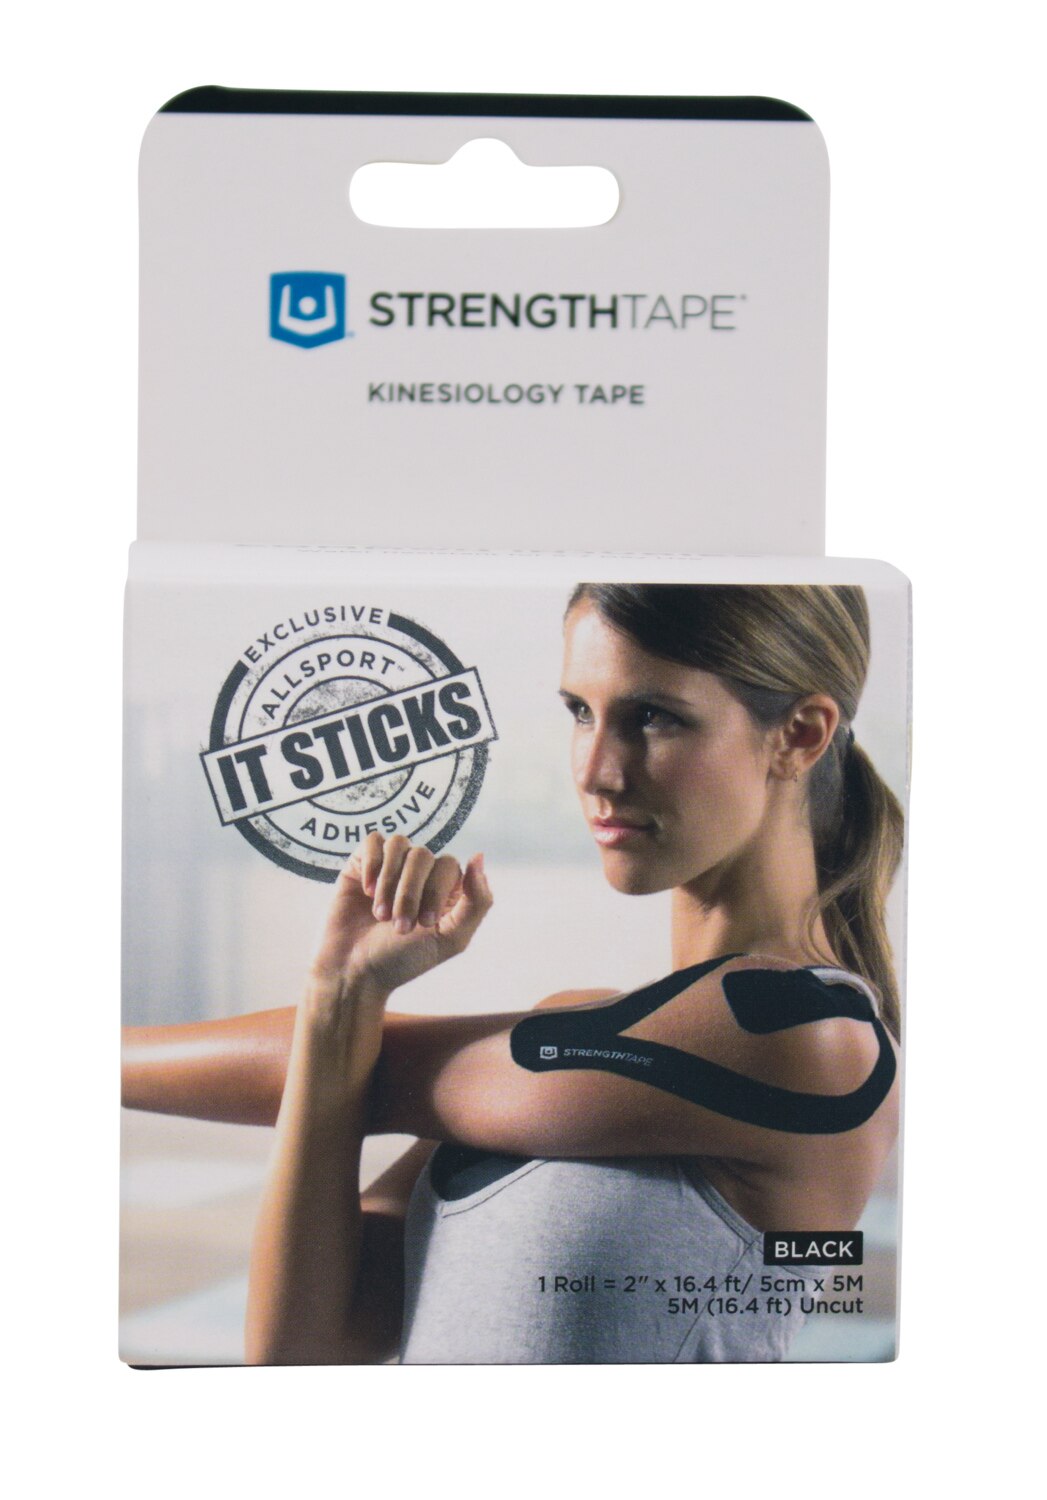 StrengthTape Kinesiology Uncut Tape 5M